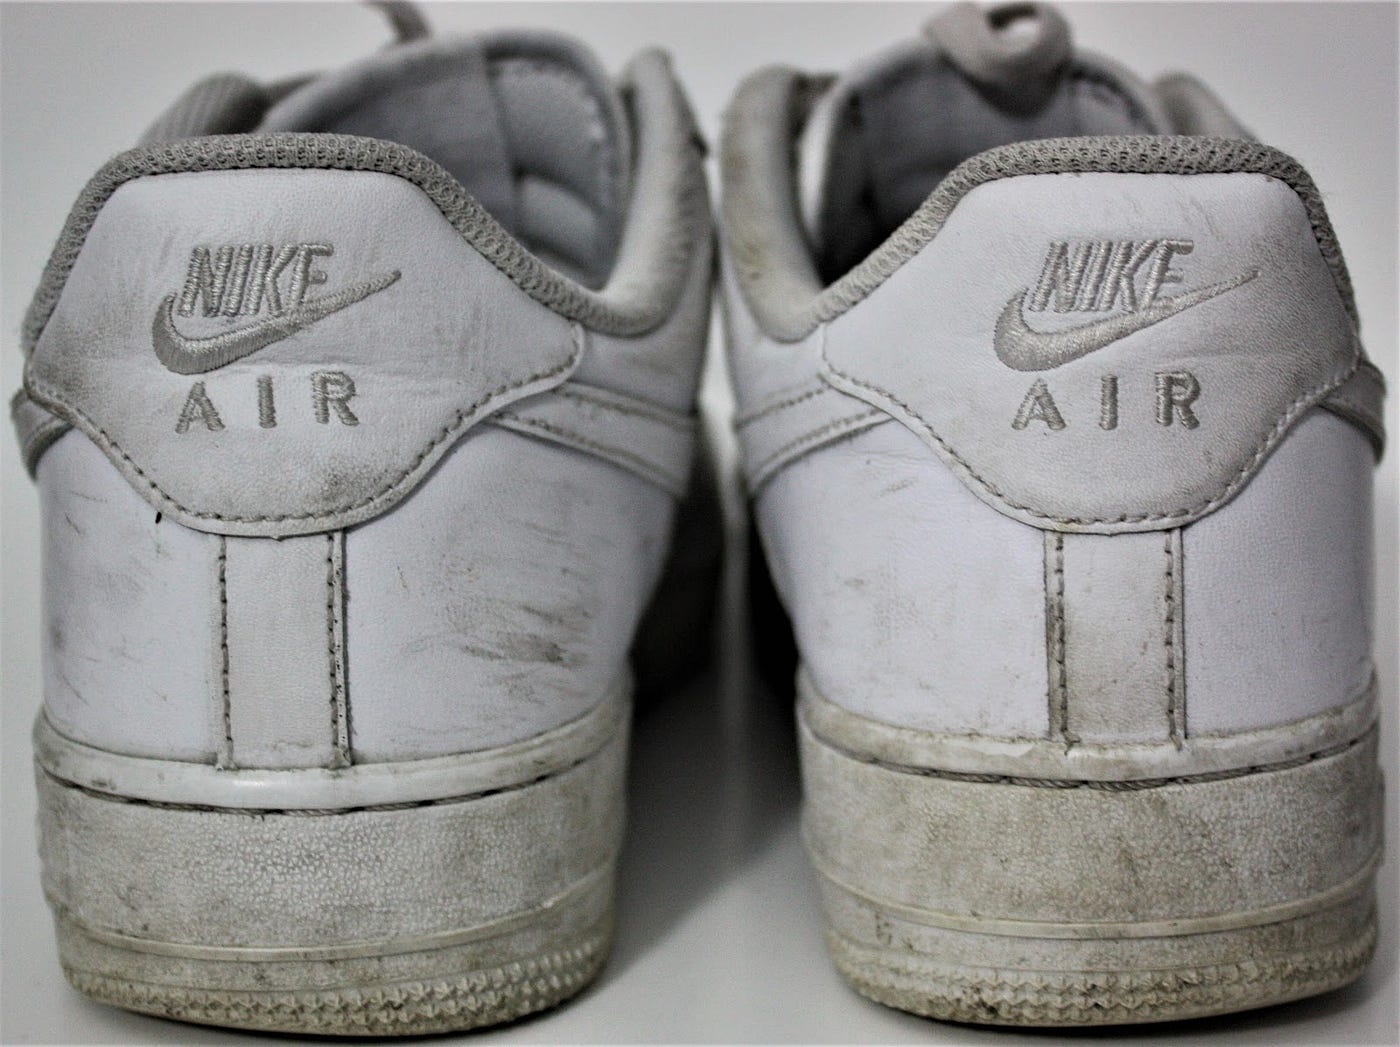 My pair of Nike Air Force 1. The nostalgic, sentimental sneaker | by Daniel  Michael Centeno | Medium